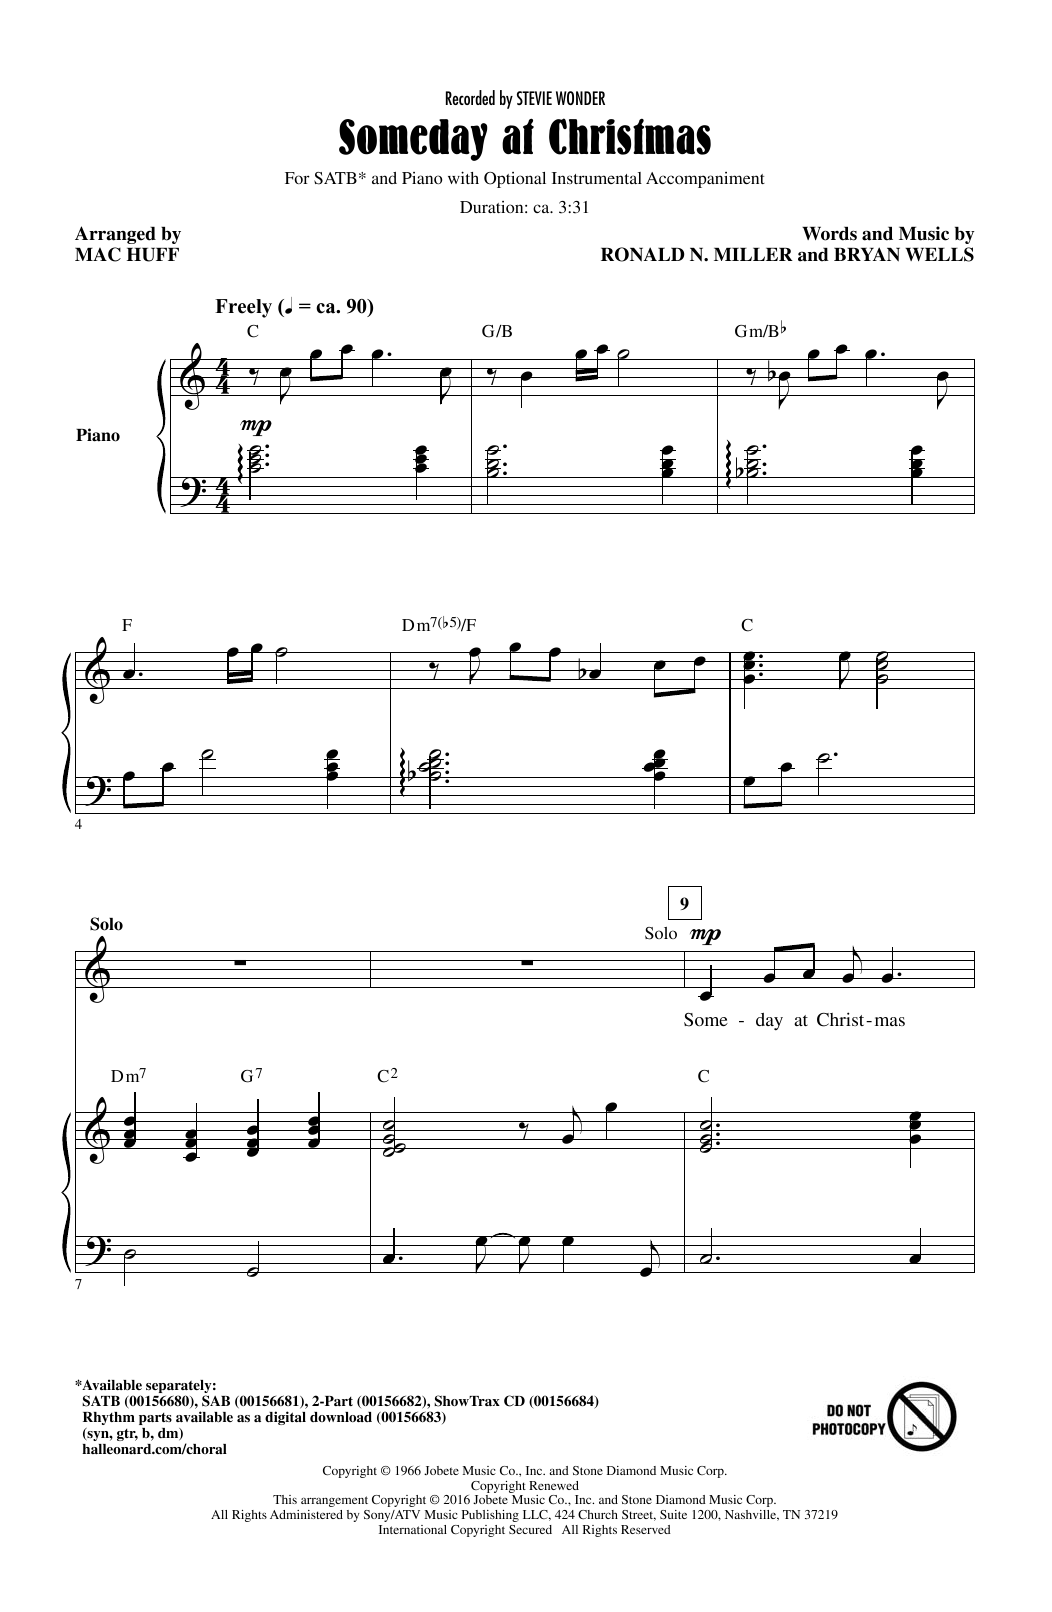 Stevie Wonder Someday At Christmas (arr. Mac Huff) Sheet Music Notes & Chords for SAB - Download or Print PDF